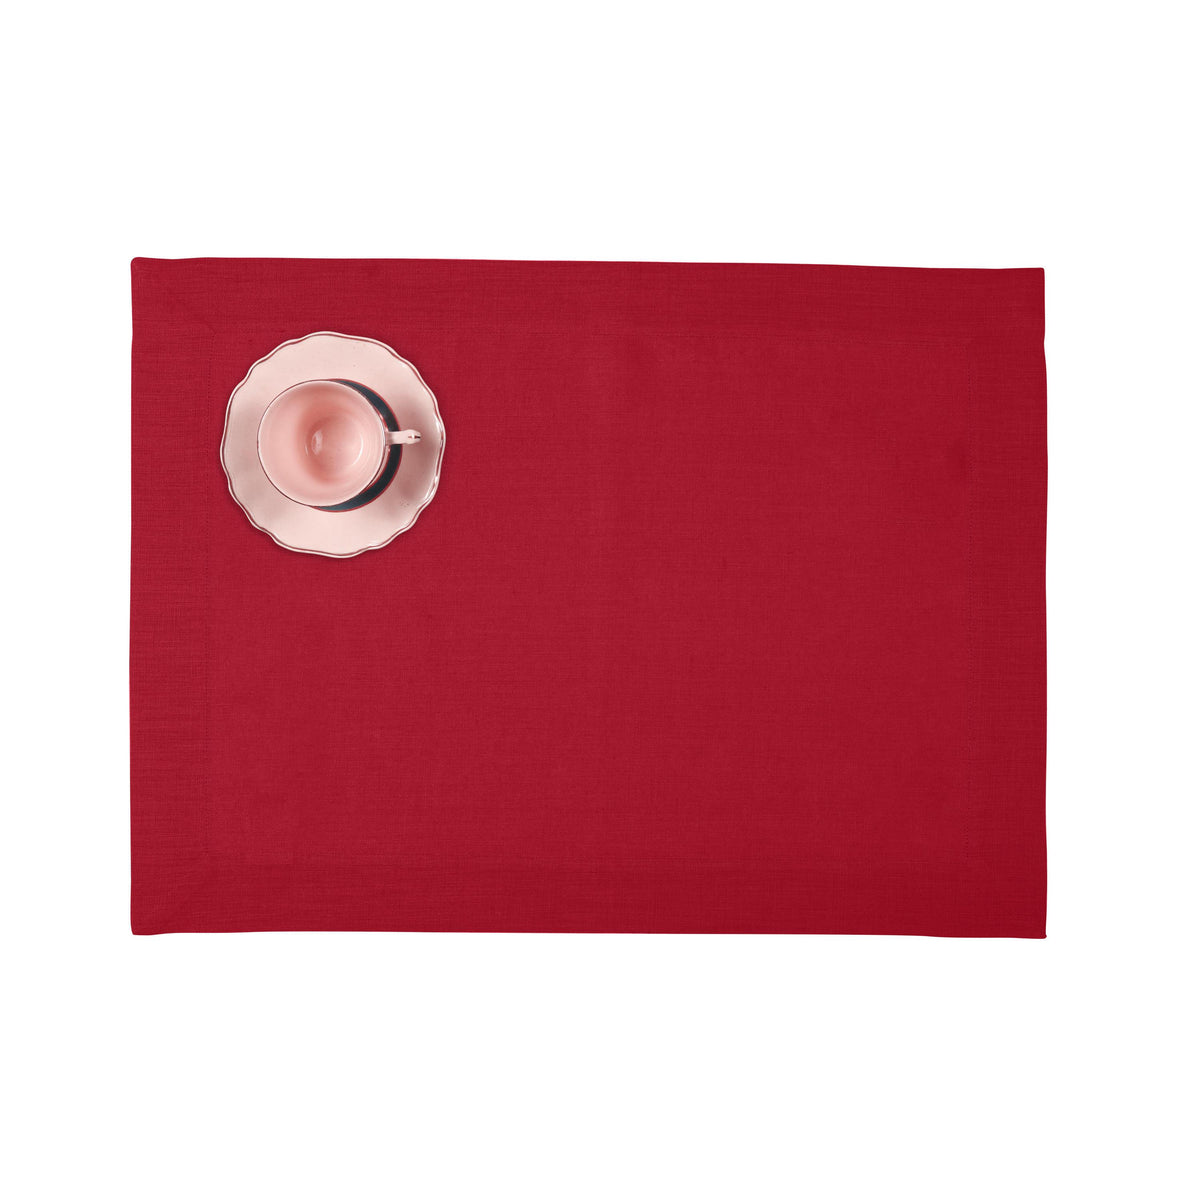 Light Red Linen Placemats 14 x 19 Inch Set of 4 - Hemmed